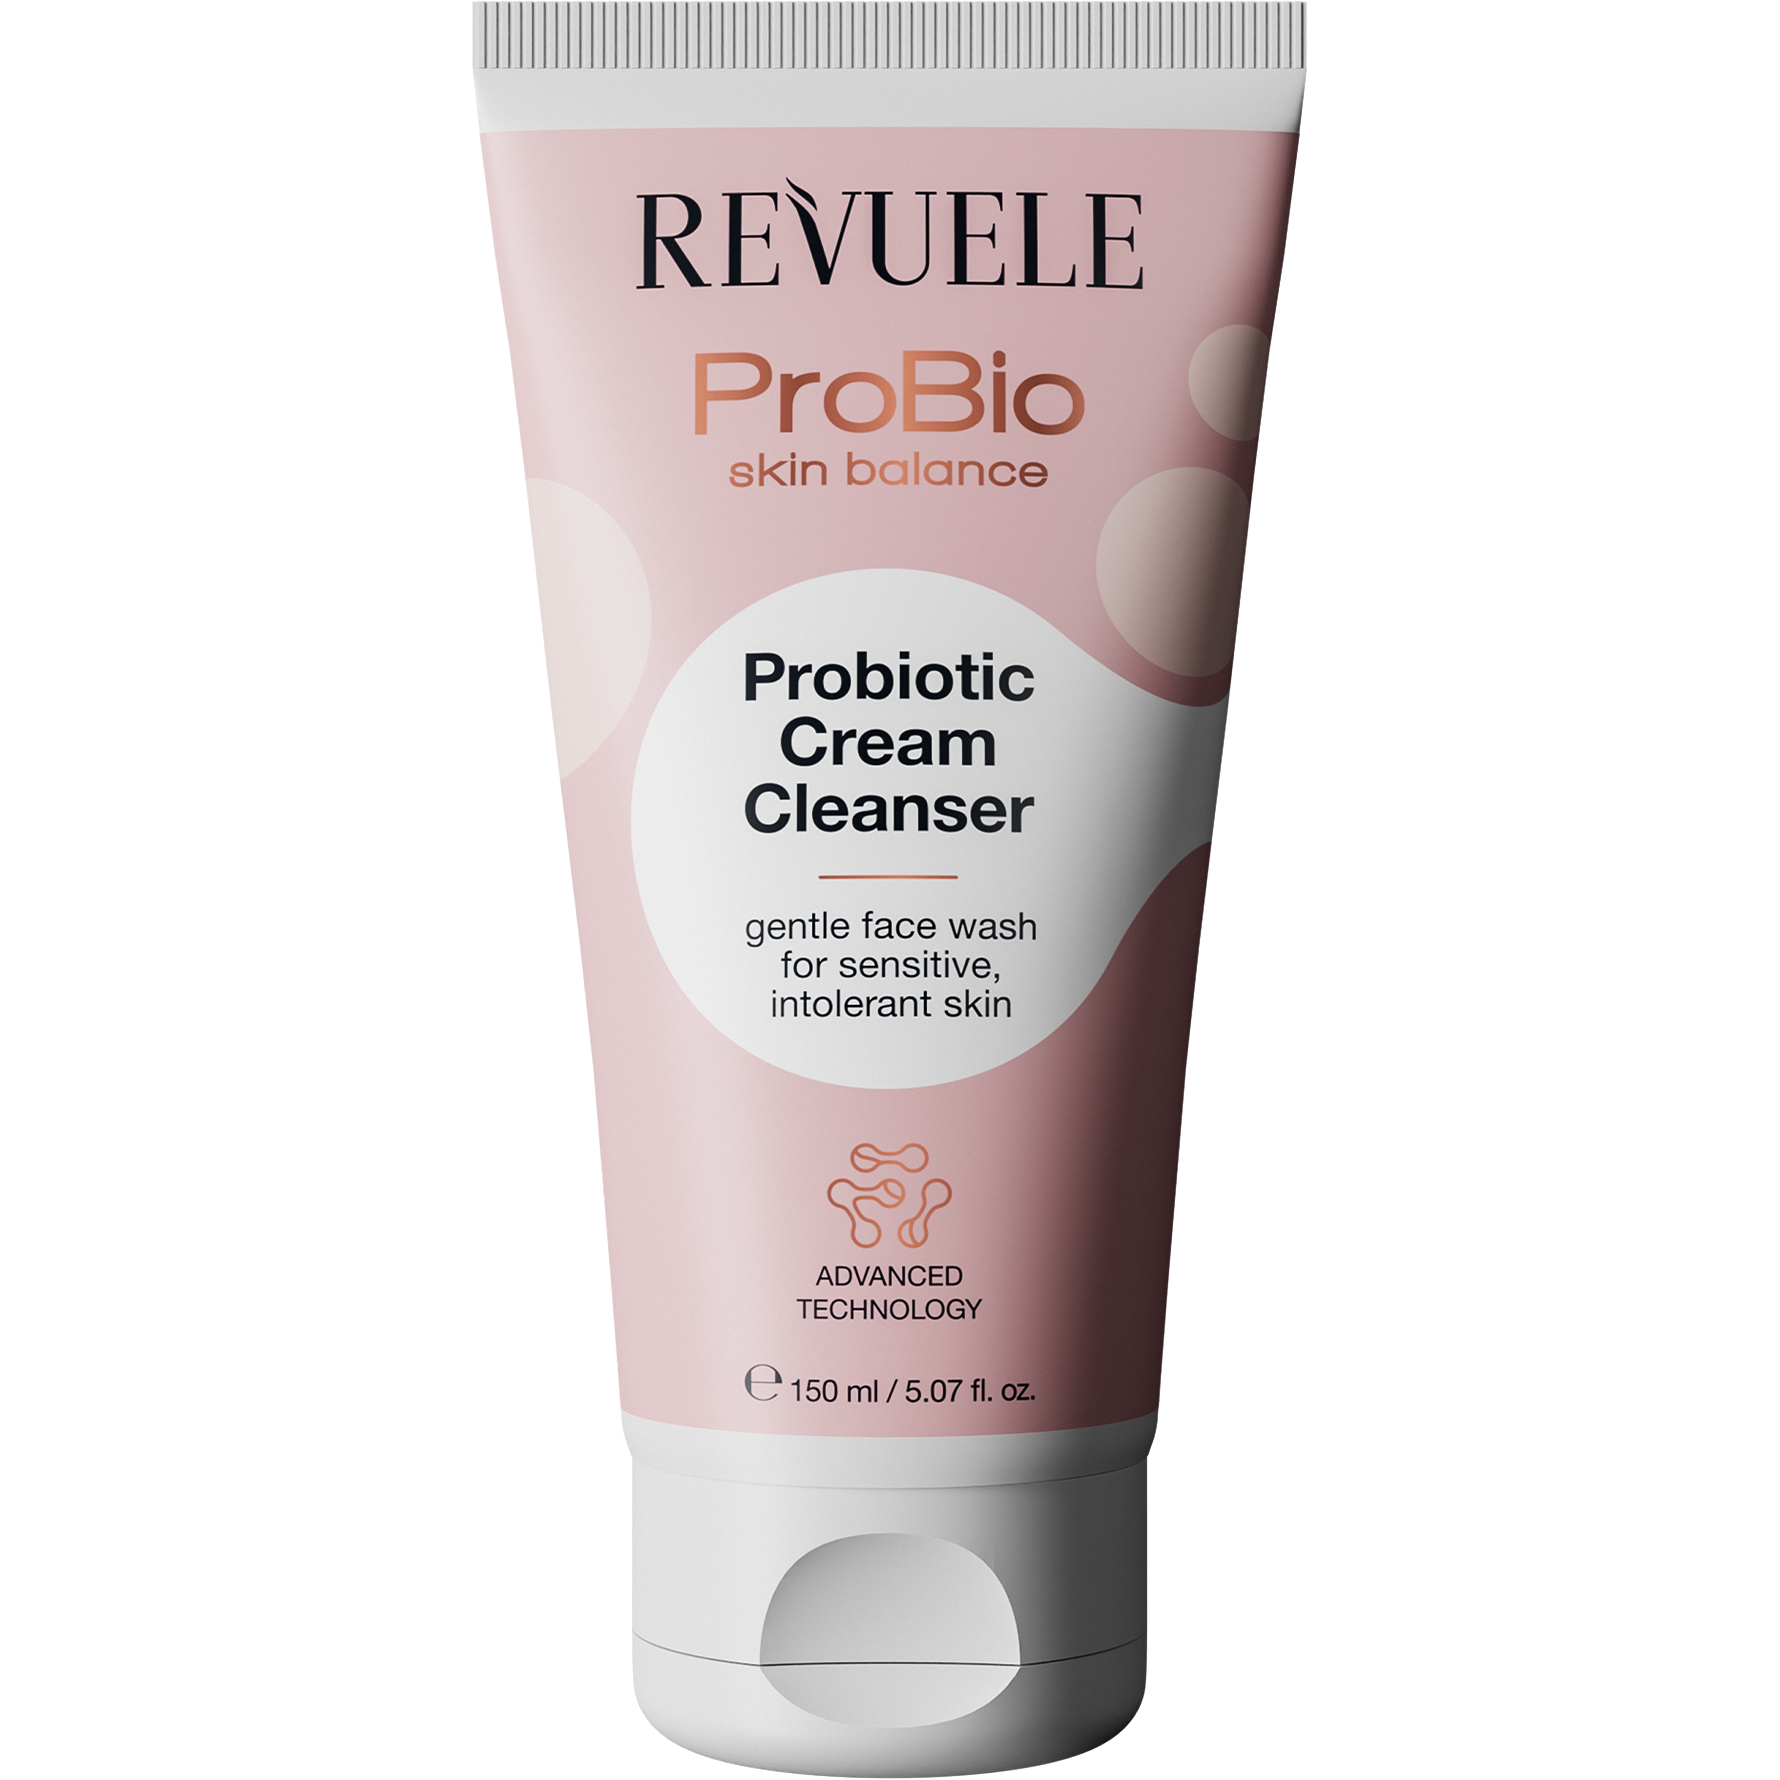 Крем-гель для умывания Revuele Probio Skin Balance Probiotic Cream Cleanser, 150 мл - фото 1